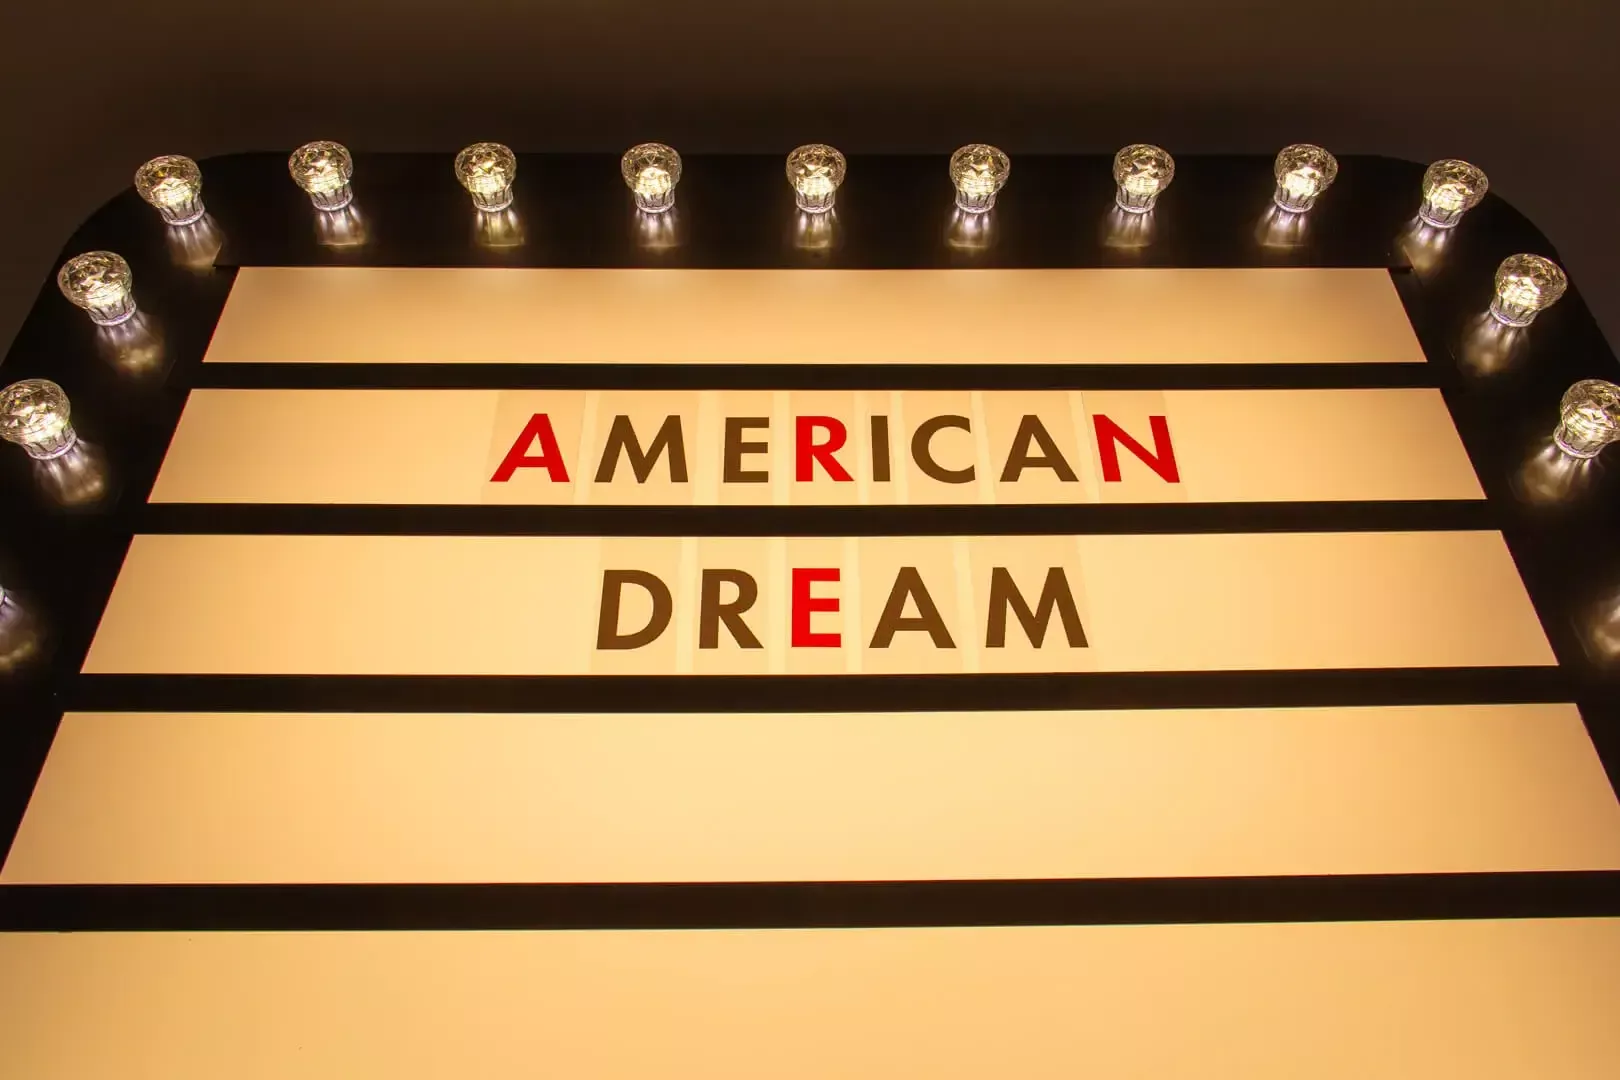 American Dream - tablica z żarówkami z napisem American Dream